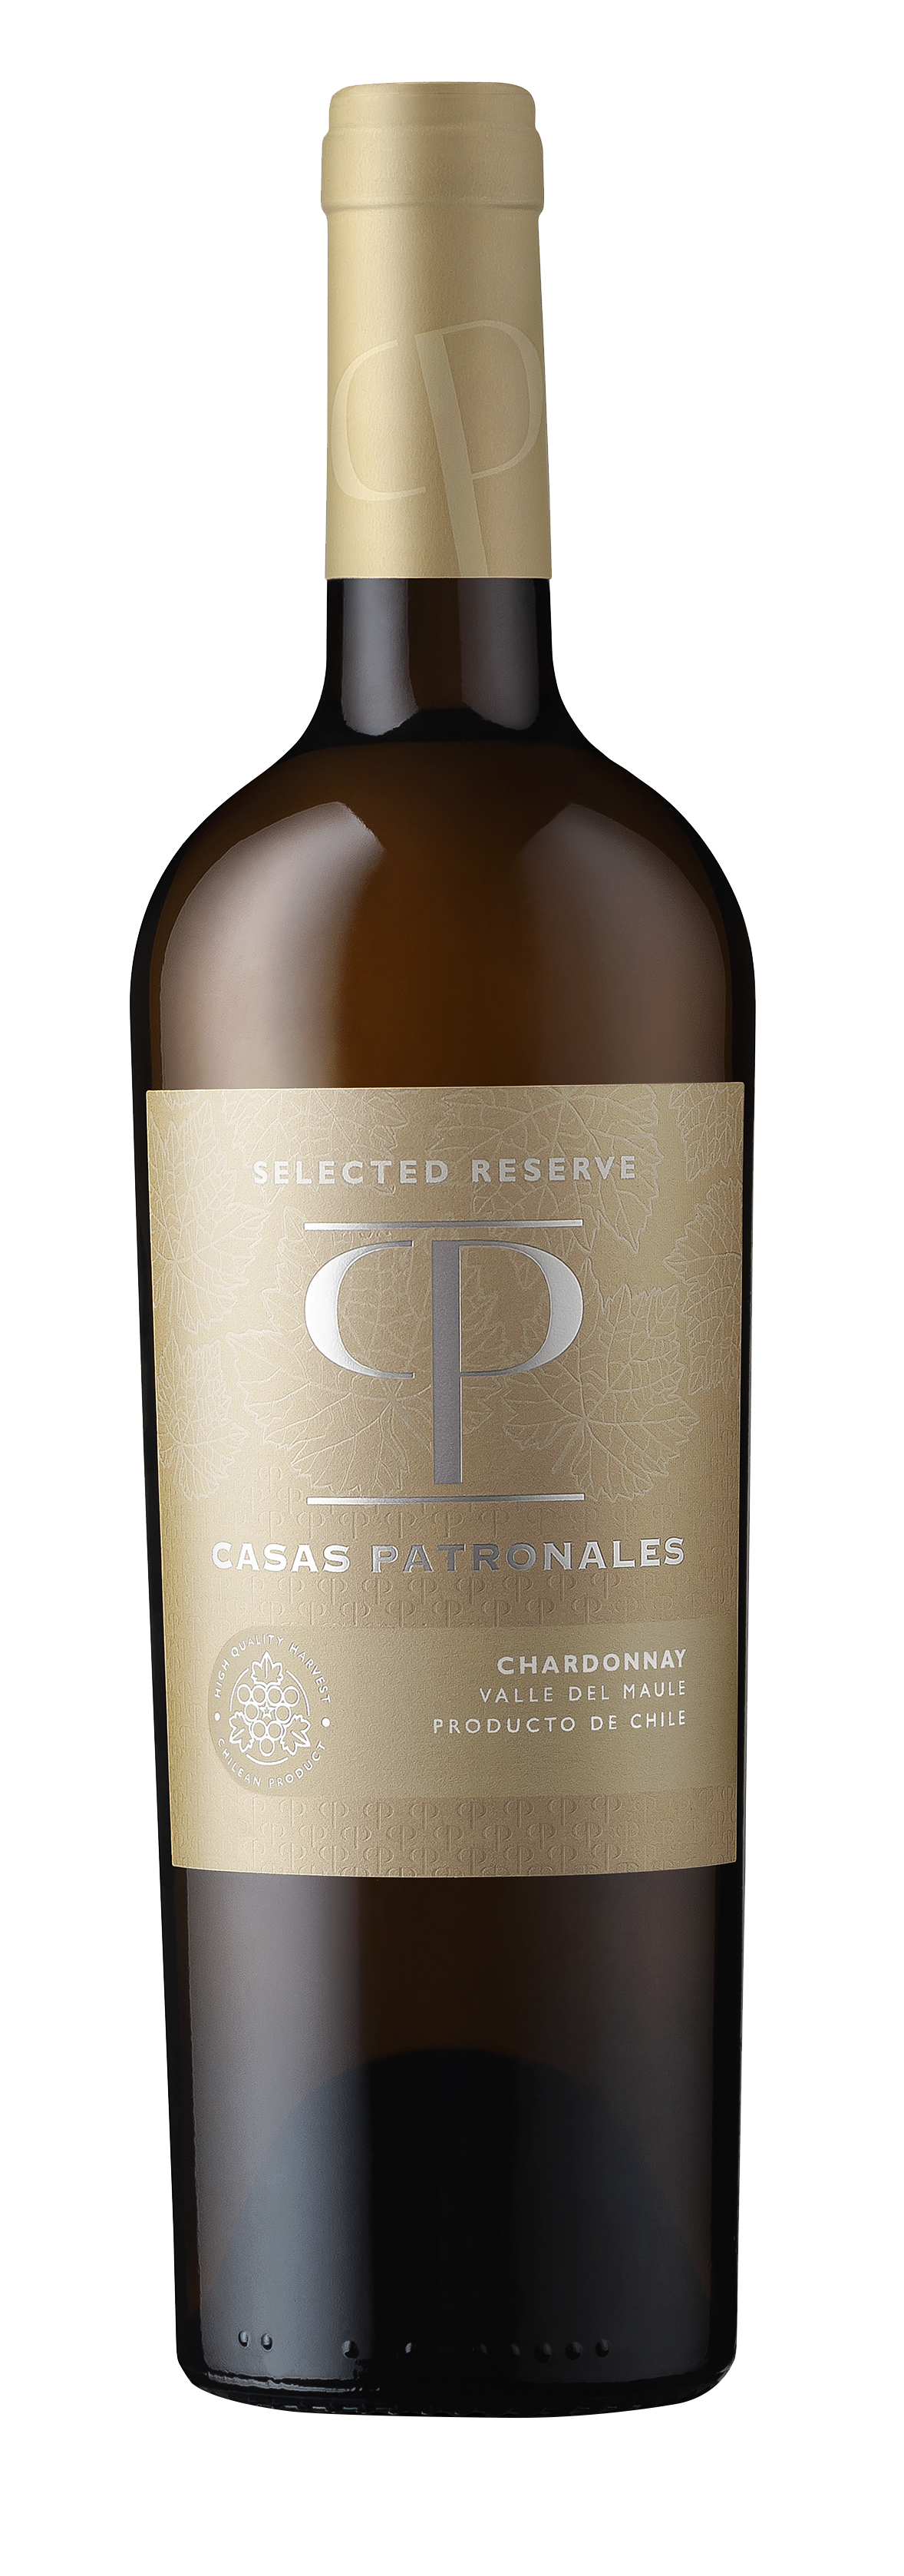 CP Selected Reserve Chardonnay (Vang Trắng)